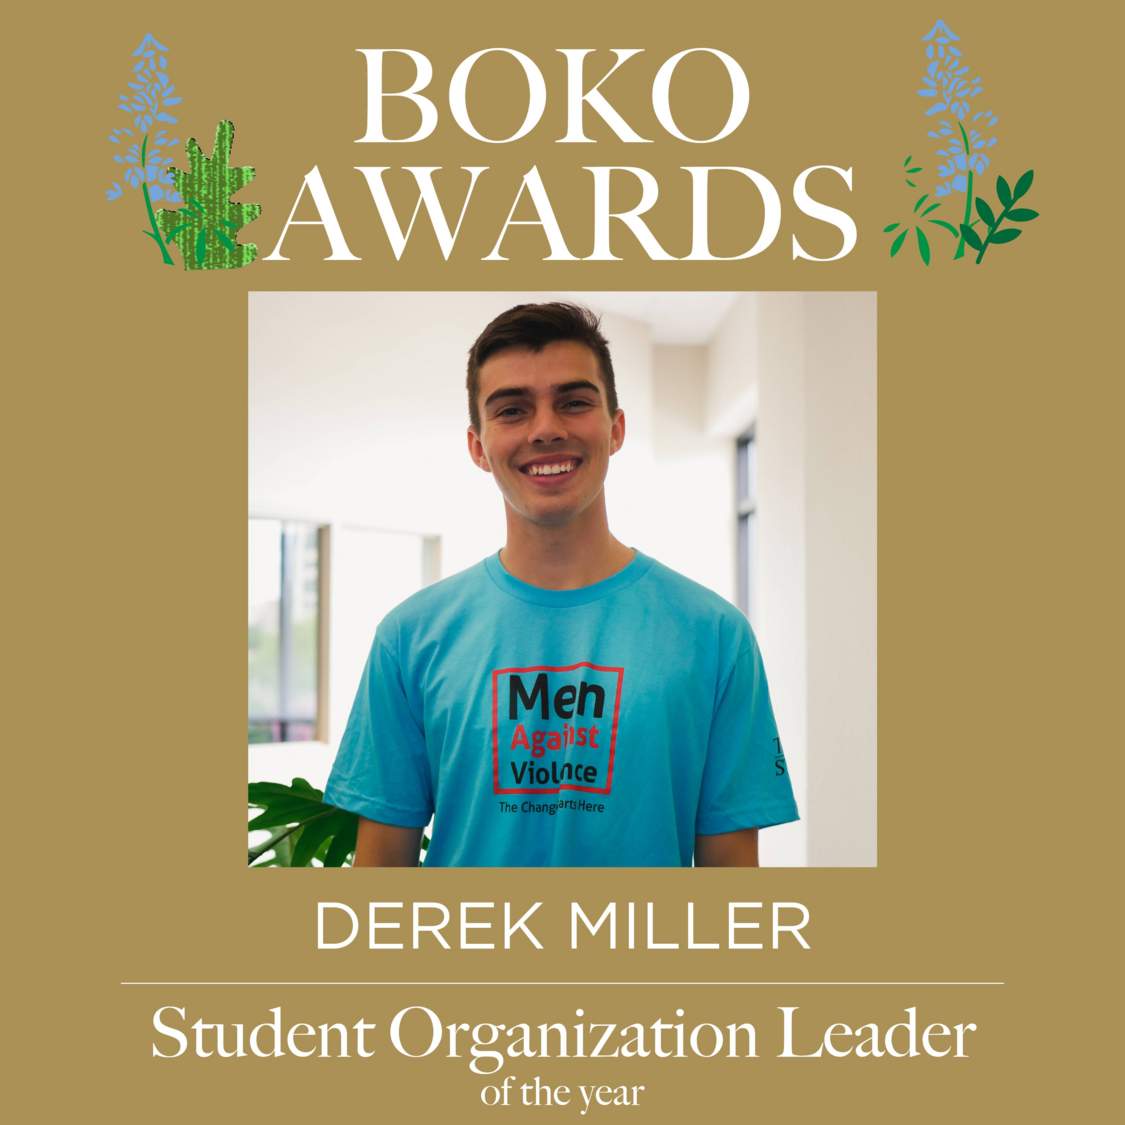 Picture of text displaying that Derek Miller won the Student Organization Leader award.